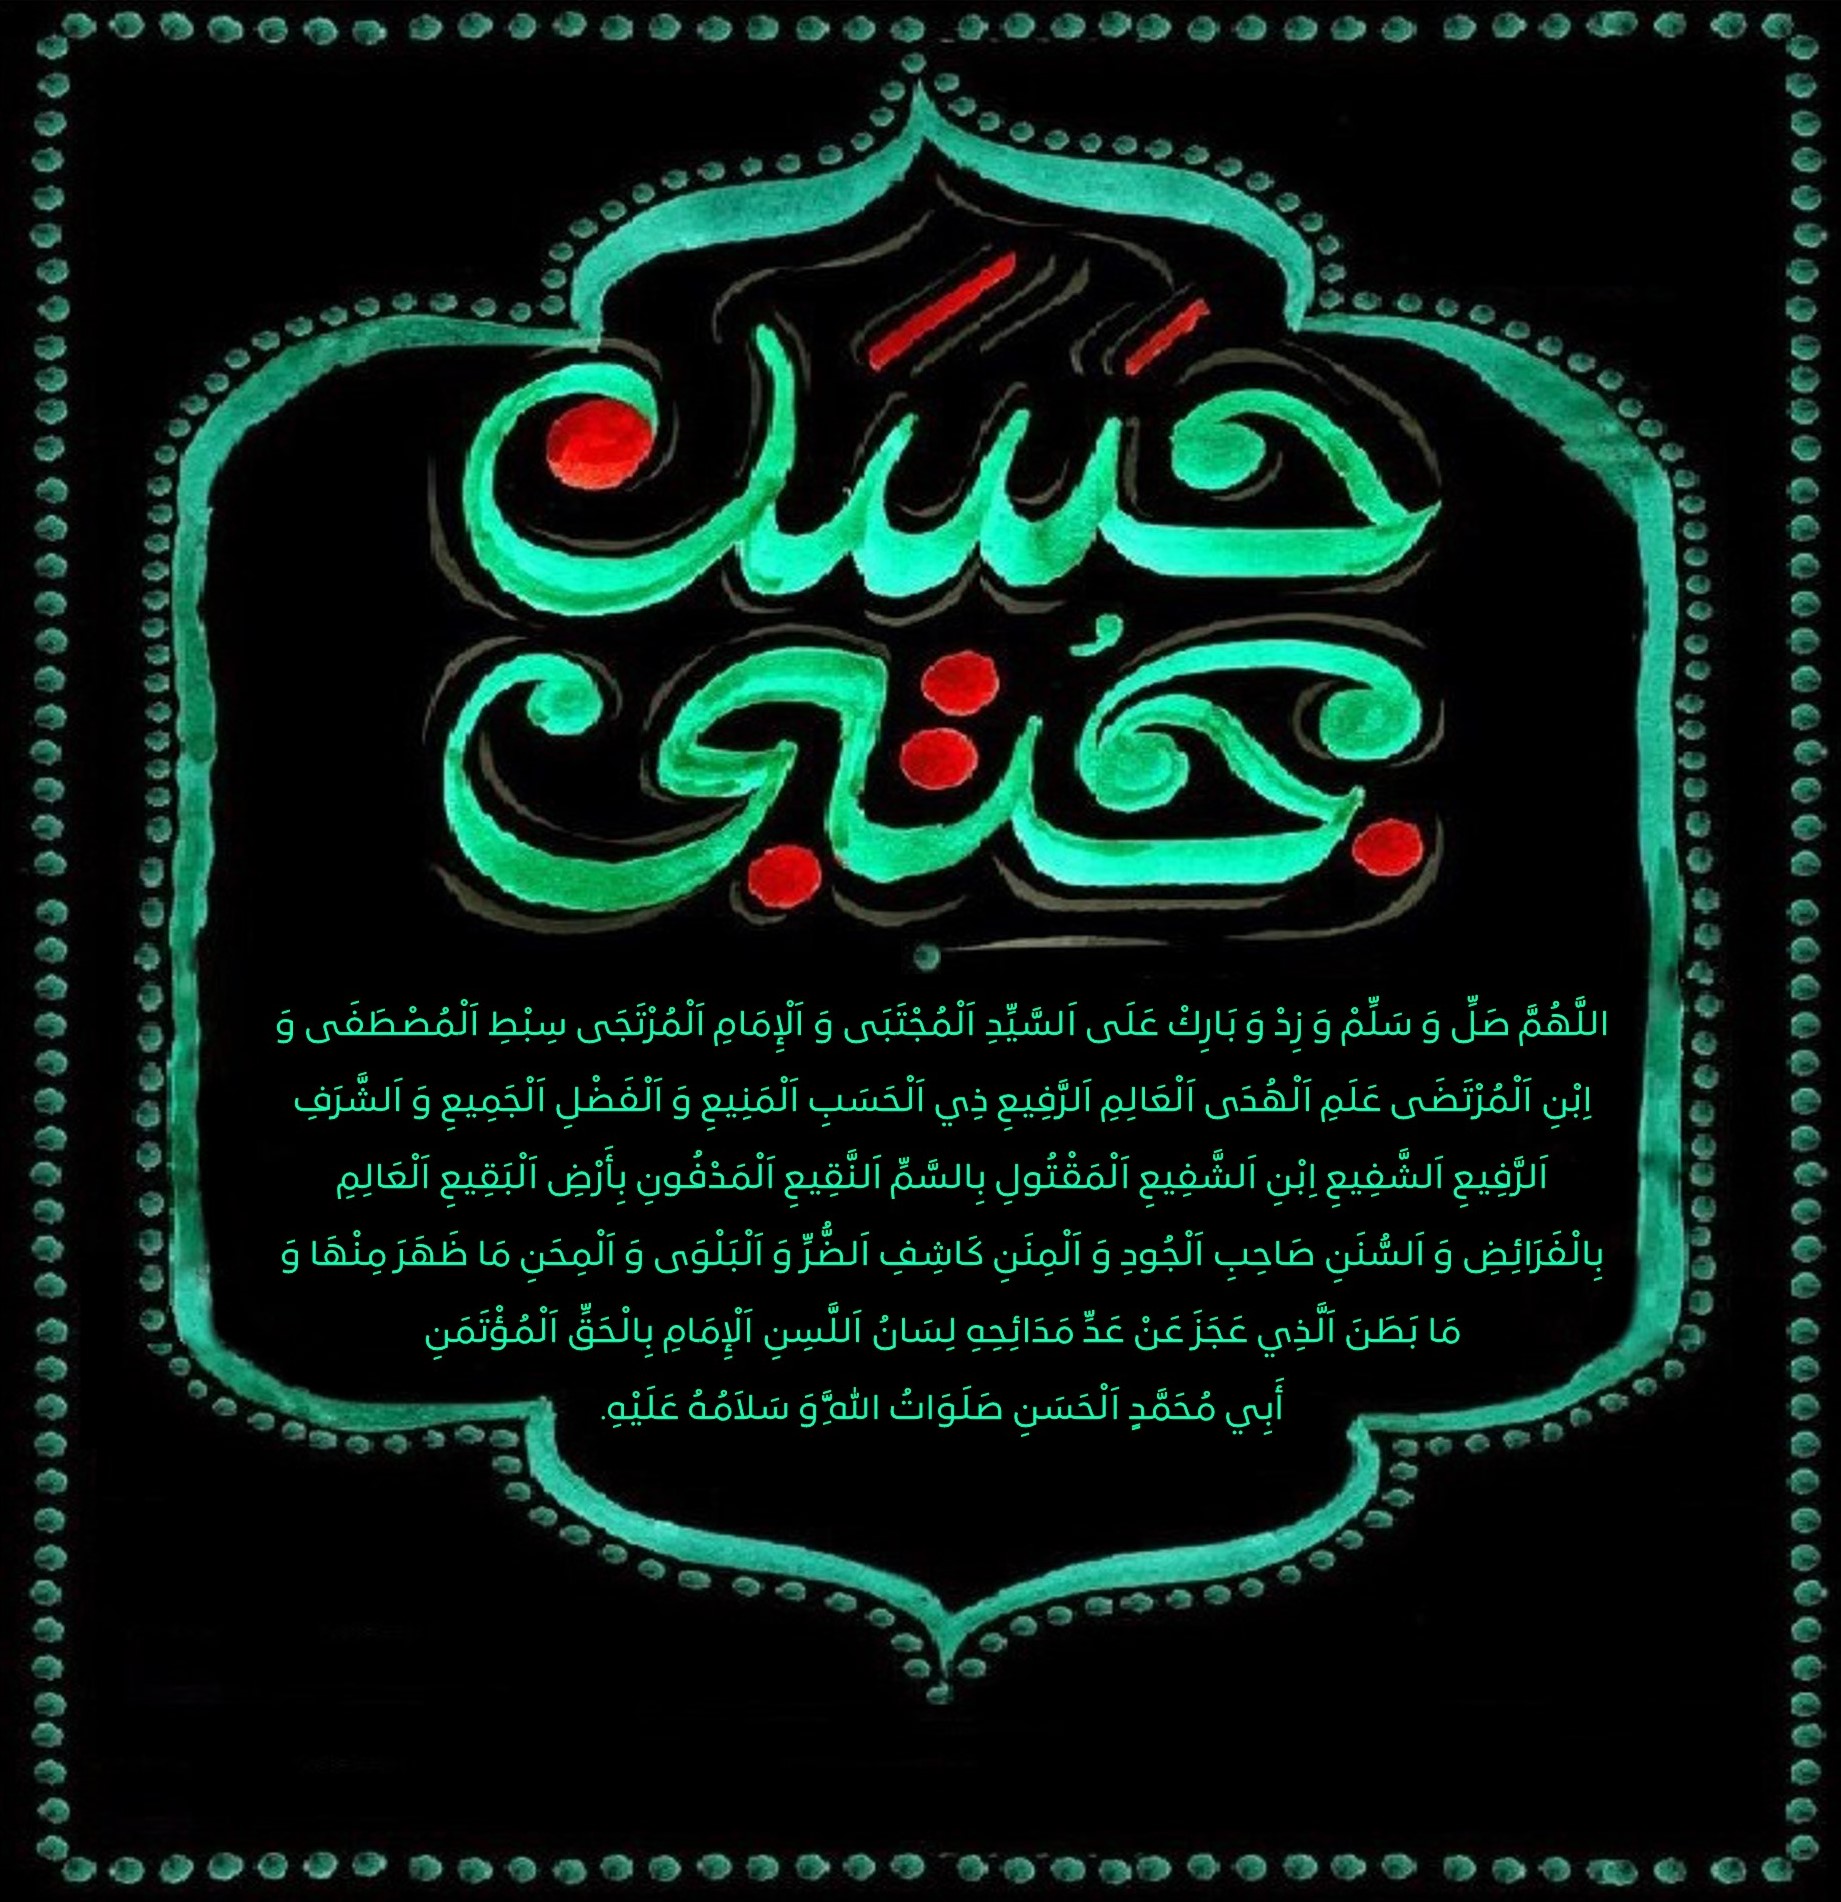 صلوات خاصه امام حسن مجتبی علیه السلام